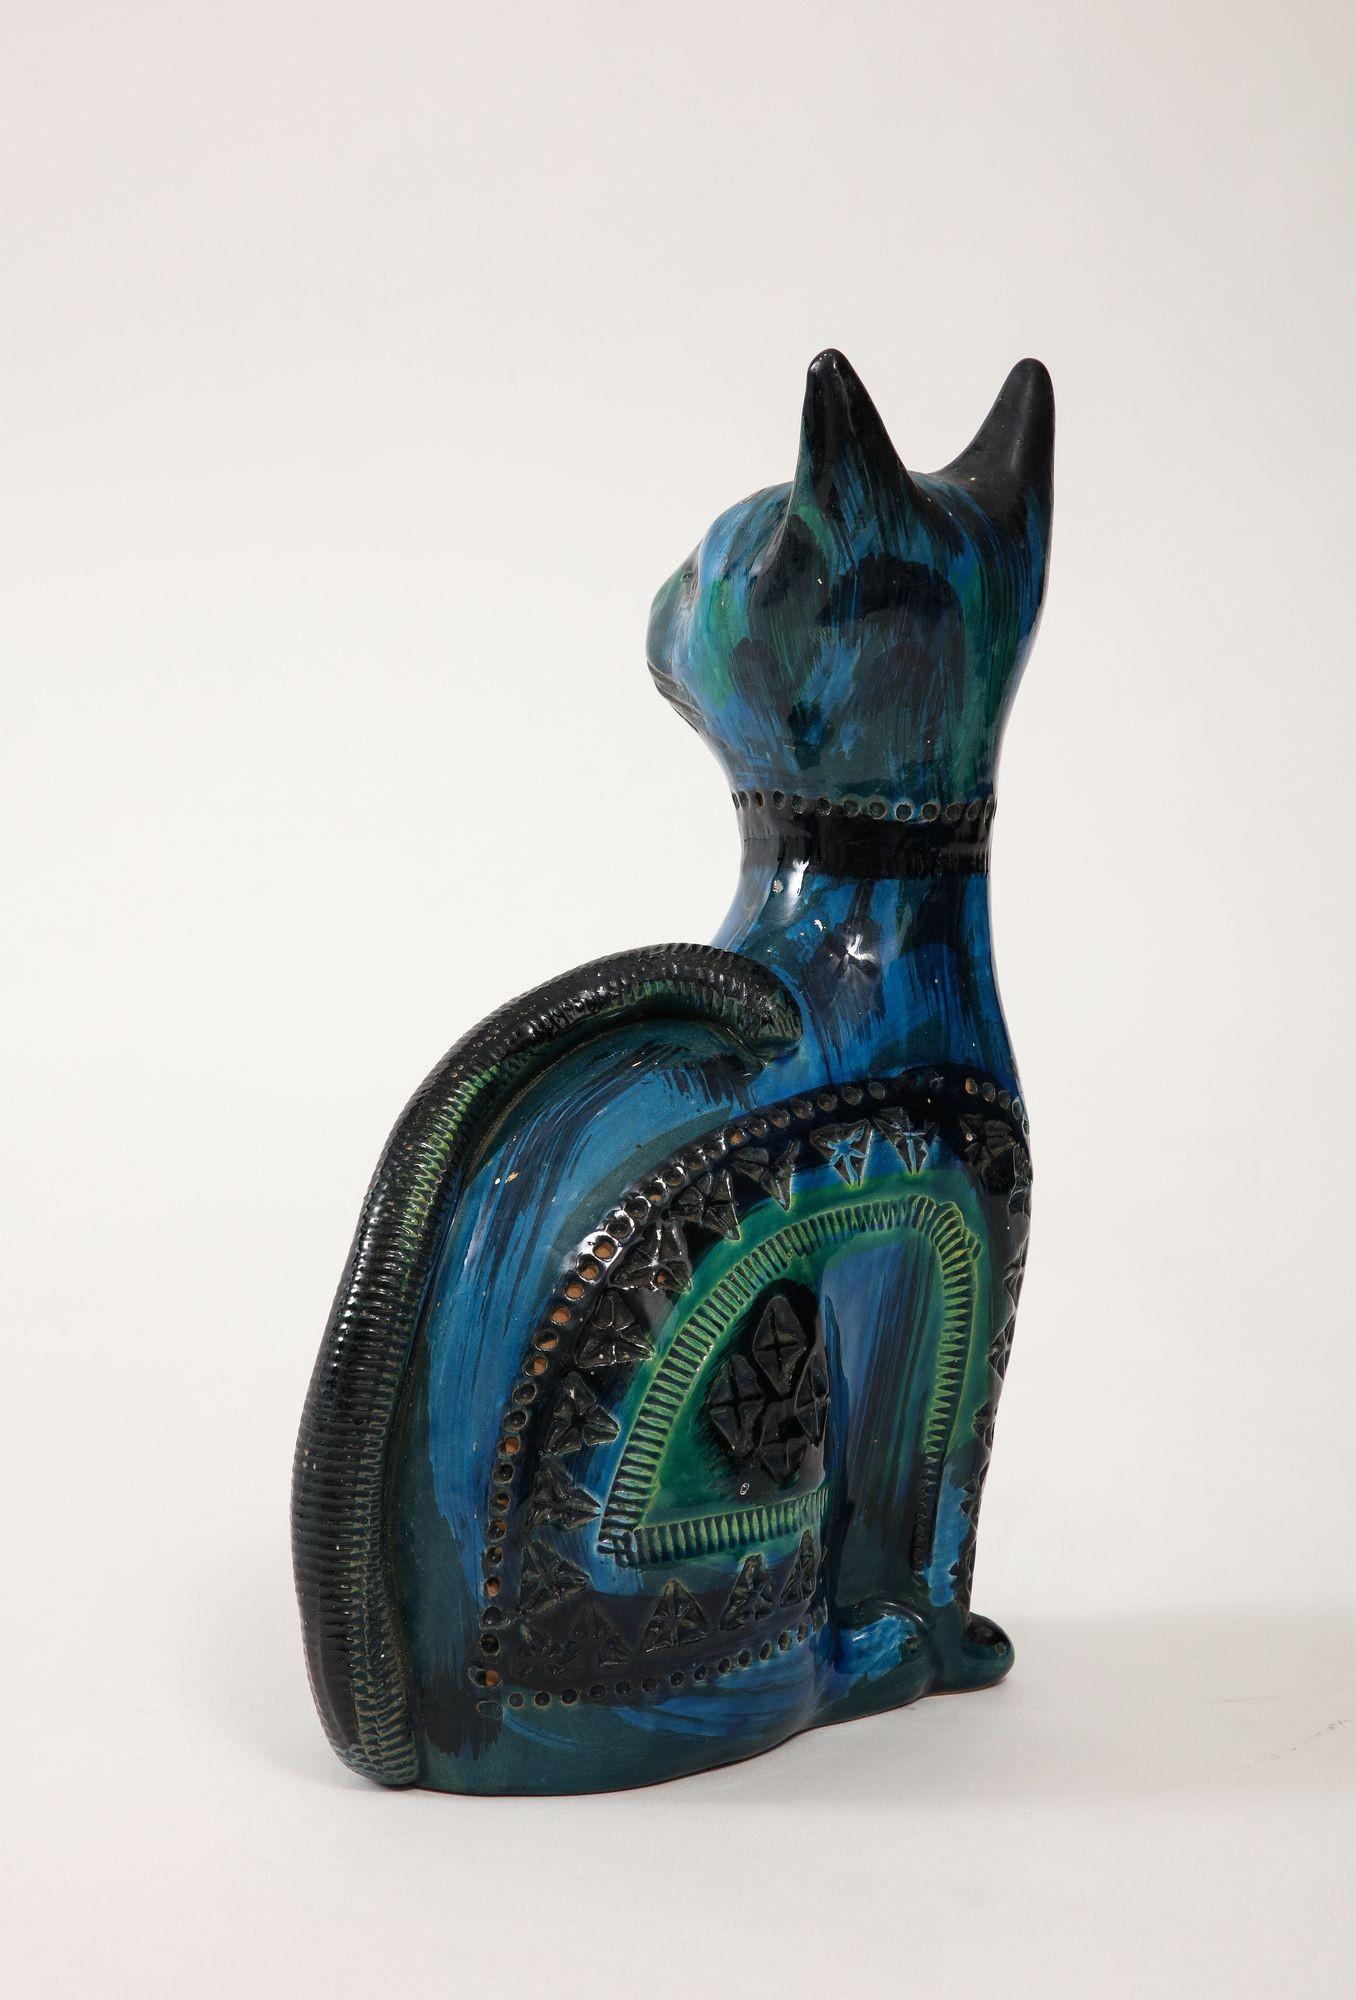 Mid-Century Modern Ceramic Cat by Aldo Londi for Bitossi in 'Rimini blue' Italy Ca. 1960 For Sale